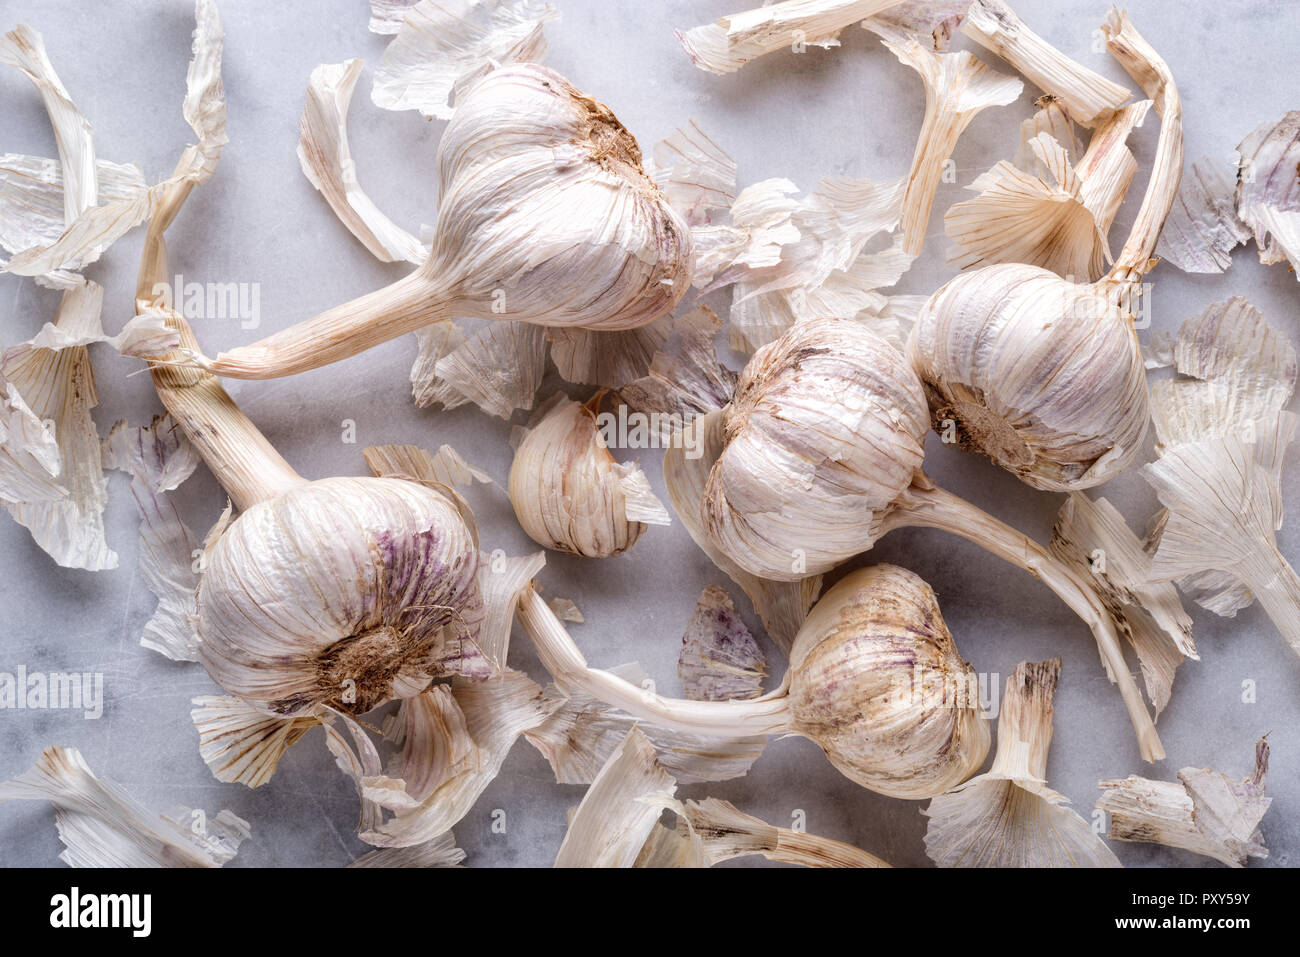 Fresh raw organic garlic flat lay on a white marble table top. Stock Photo